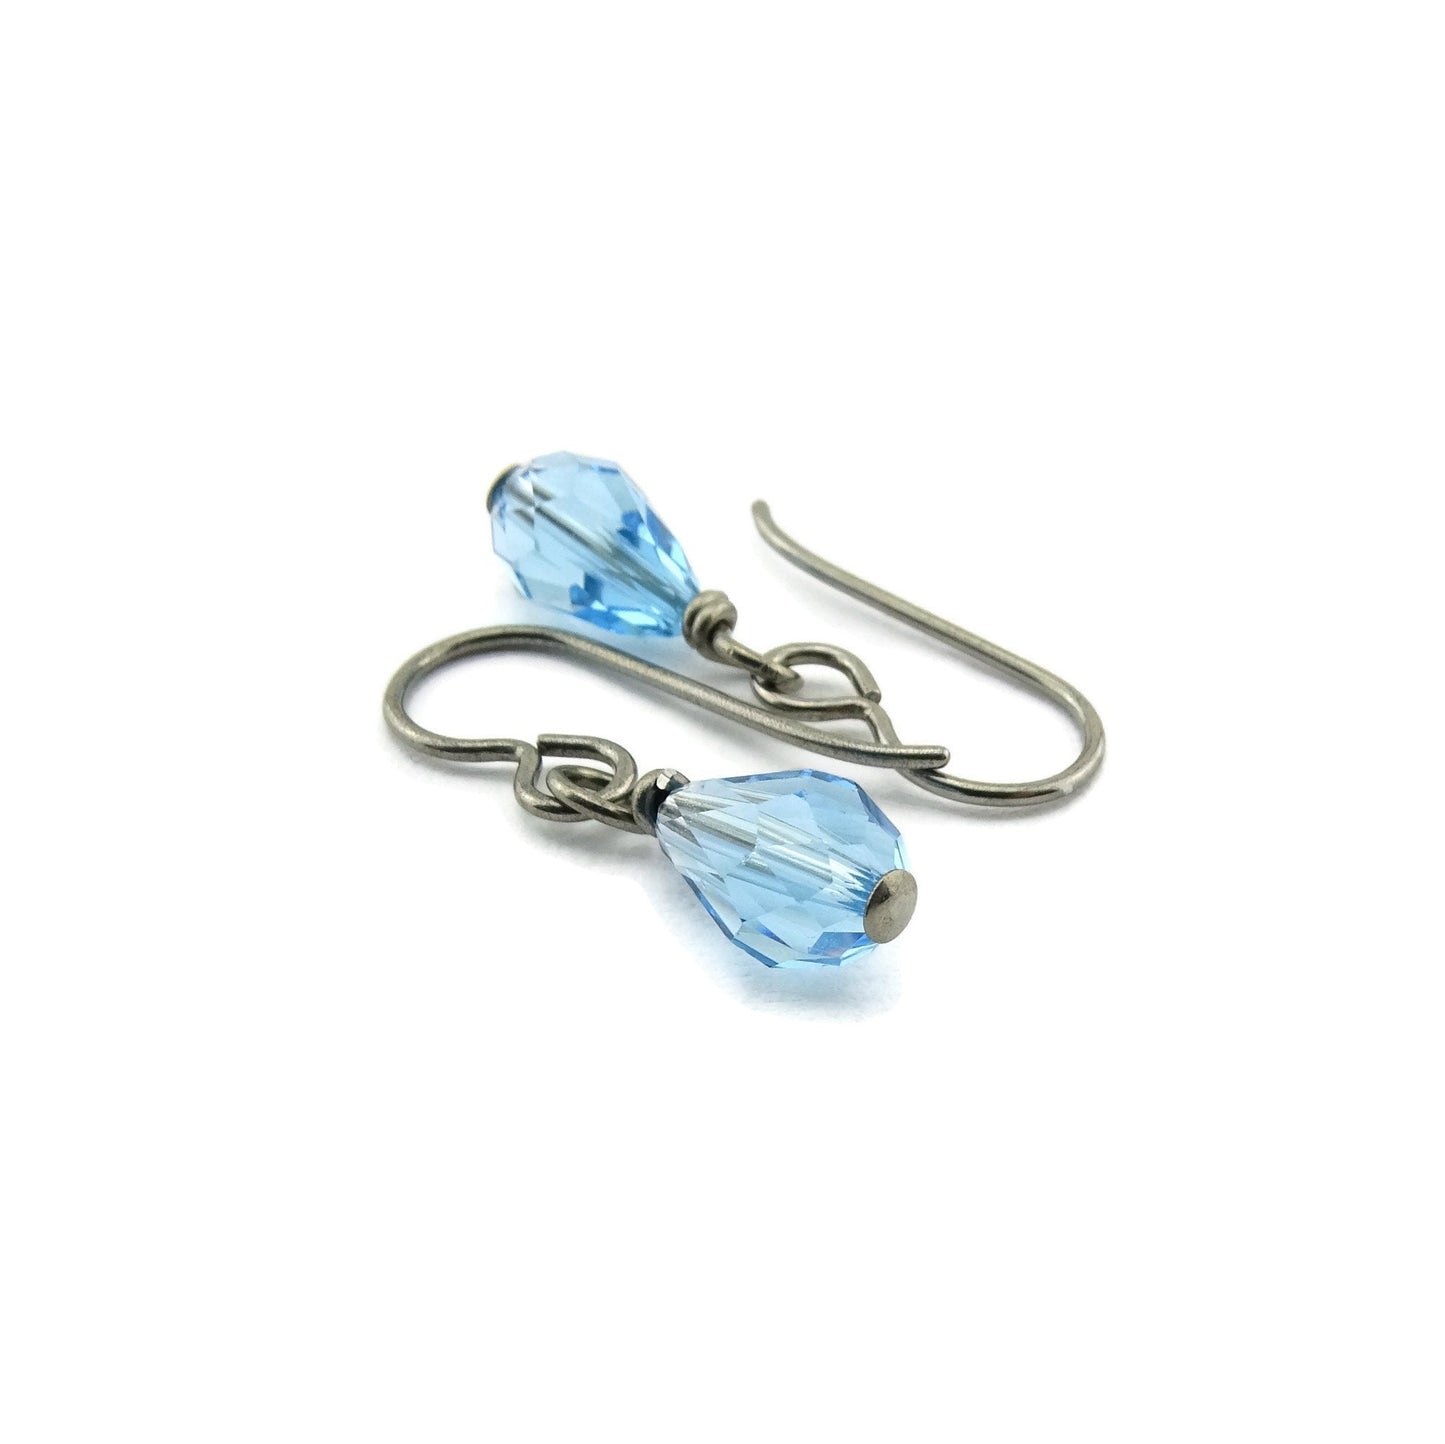 Aquamarine Blue Drop Titanium Earrings, Swarovski Crystal Aqua Blue Teardrop, Nickel Free Hypoallergenic Niobium Earrings for Sensitive Ears